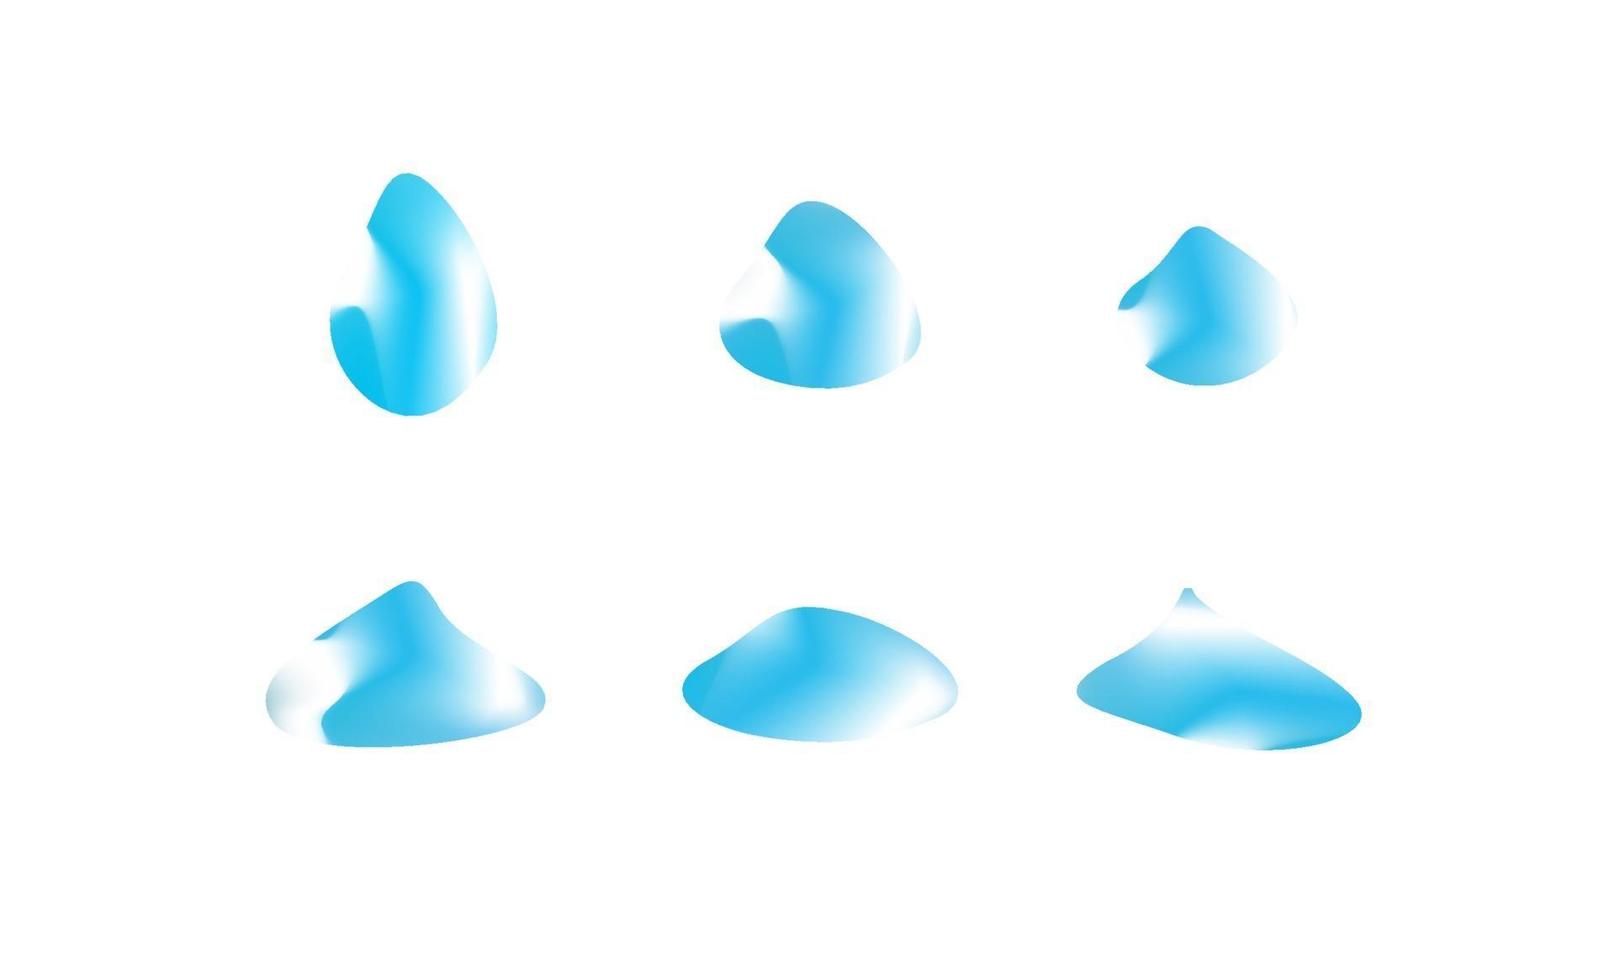 conjunto de elementos gráficos modernos abstractos. degradado formas brillantes en forma de gotas de agua. colección fluida vector colorido abstracto moderno